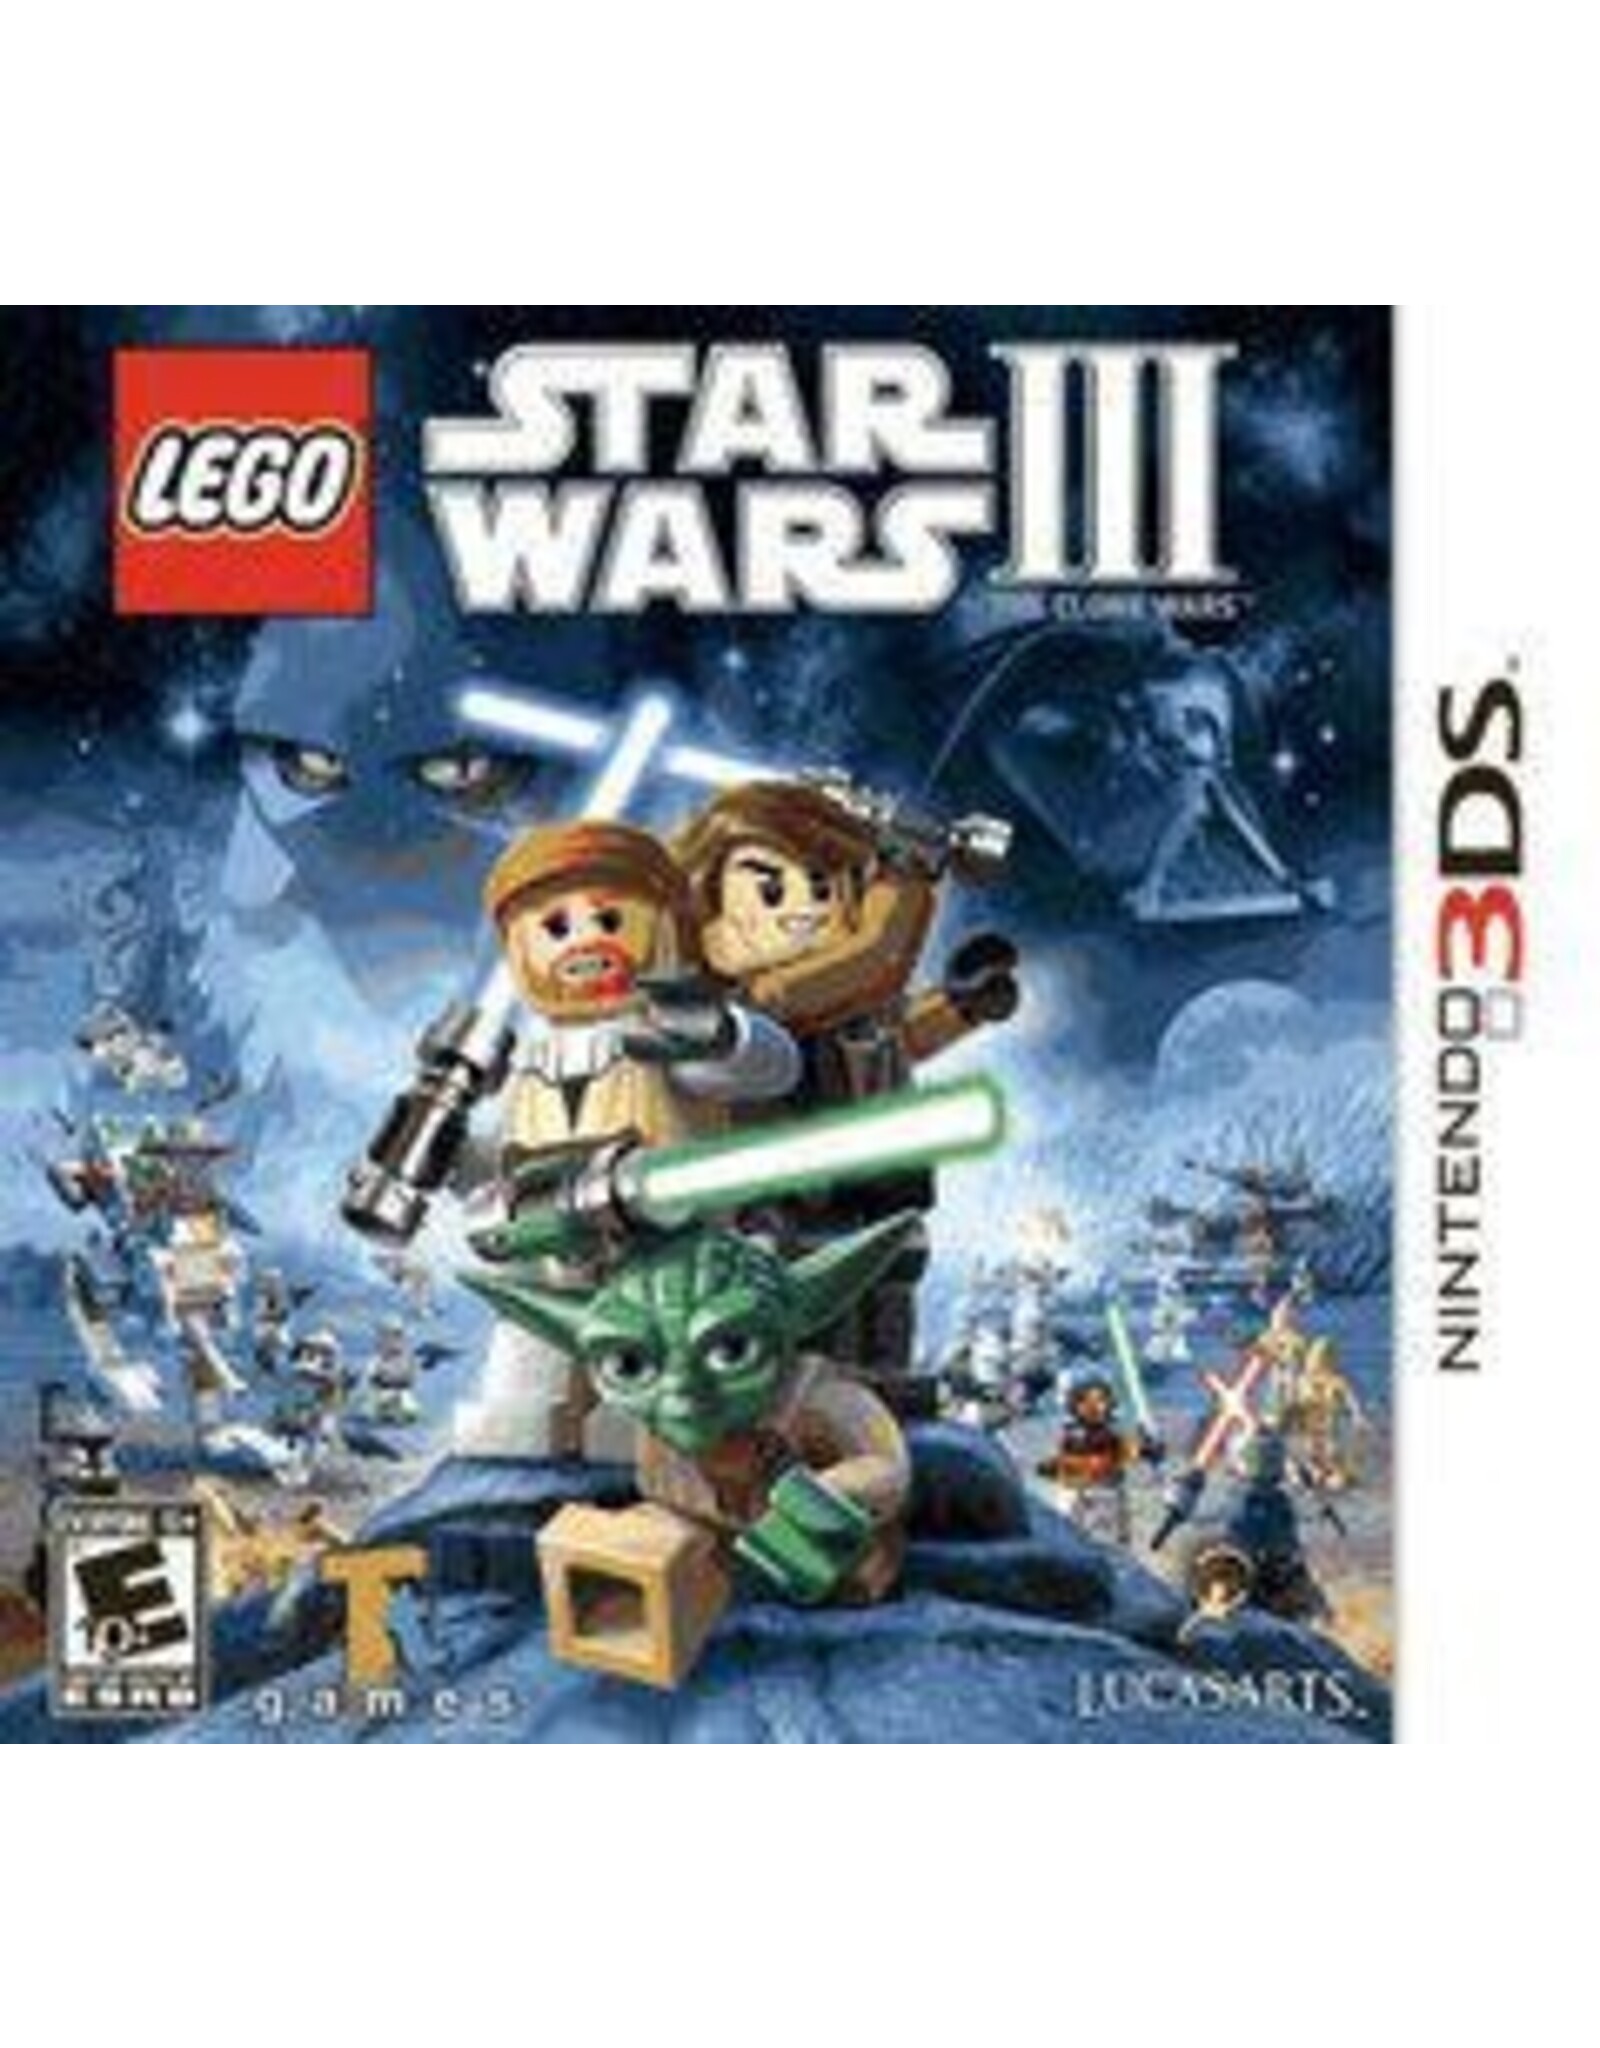 Nintendo 3DS LEGO Star Wars III: The Clone Wars (No Manual)